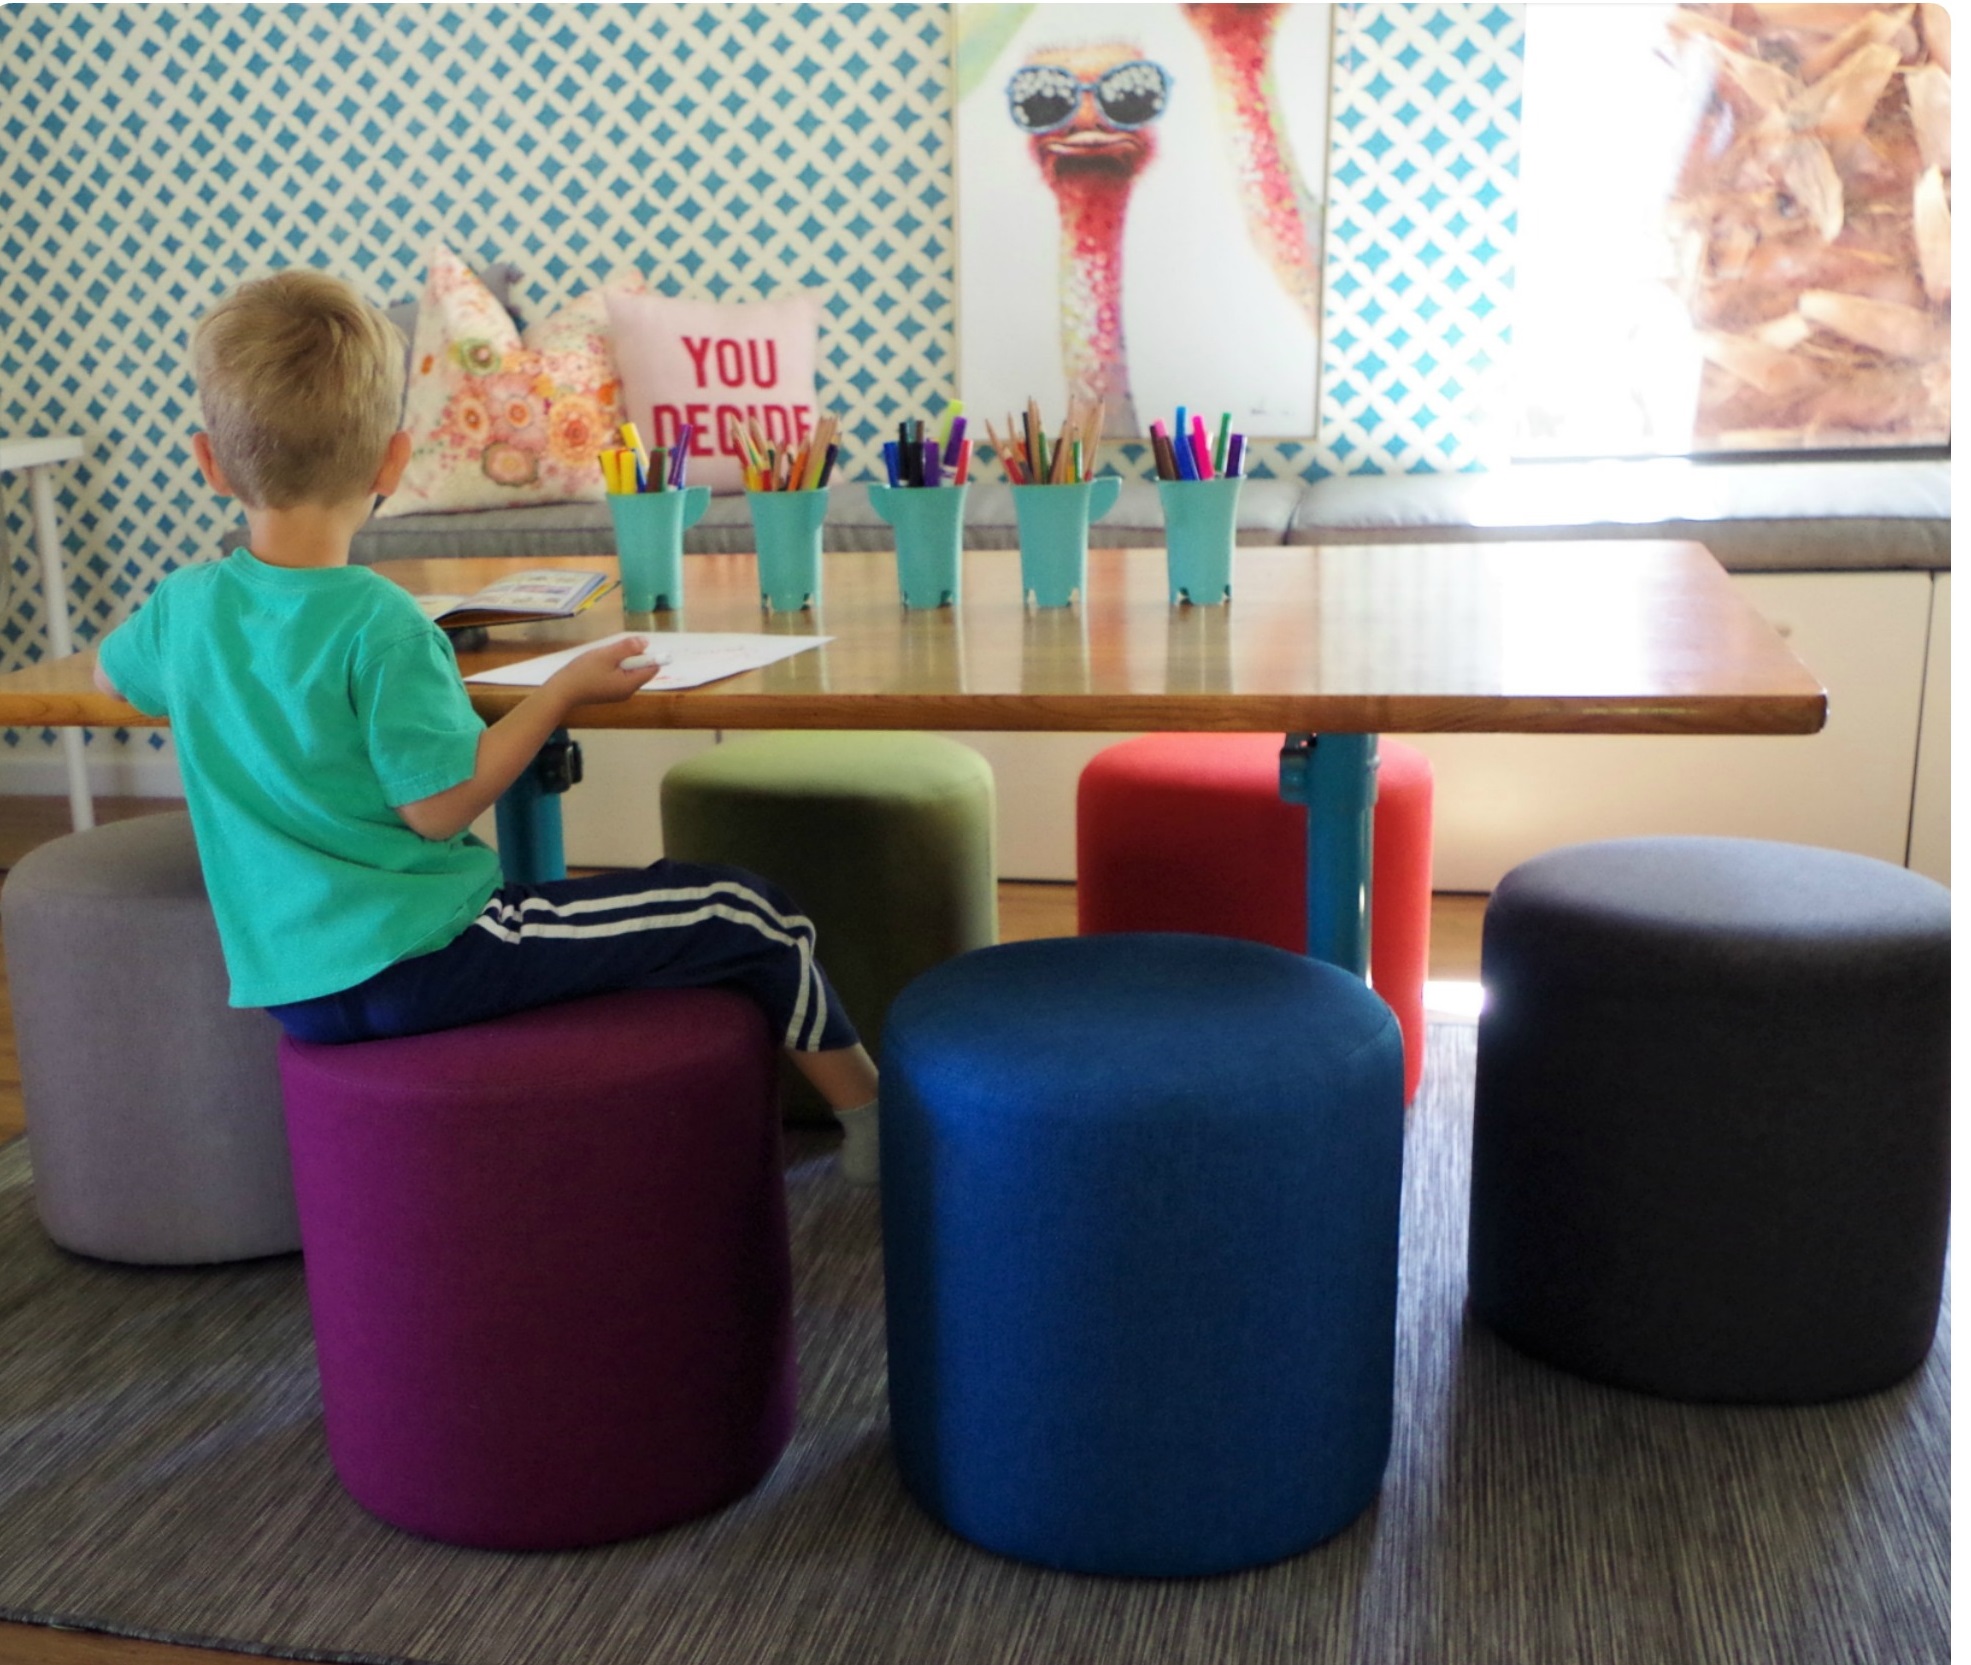 ottoan for kids 5 Fun Furniture Ideas for Kids - 4